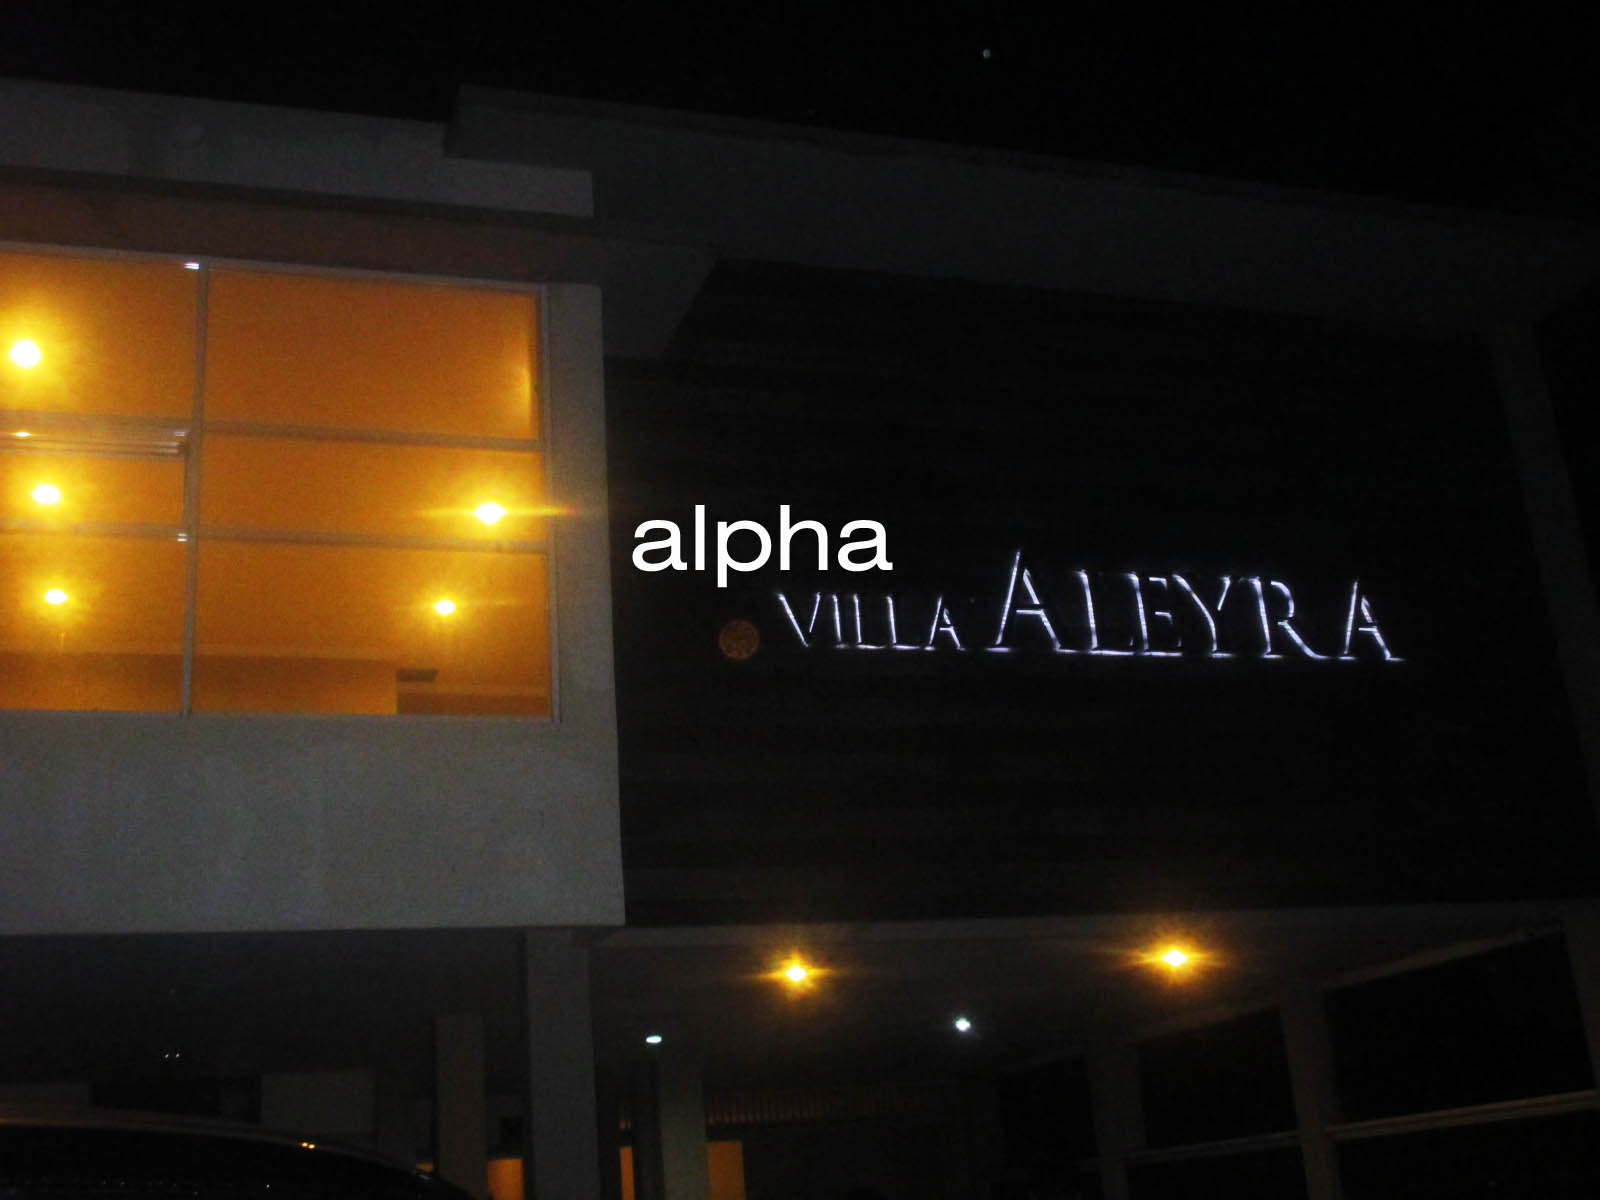 Alleyra Hotel